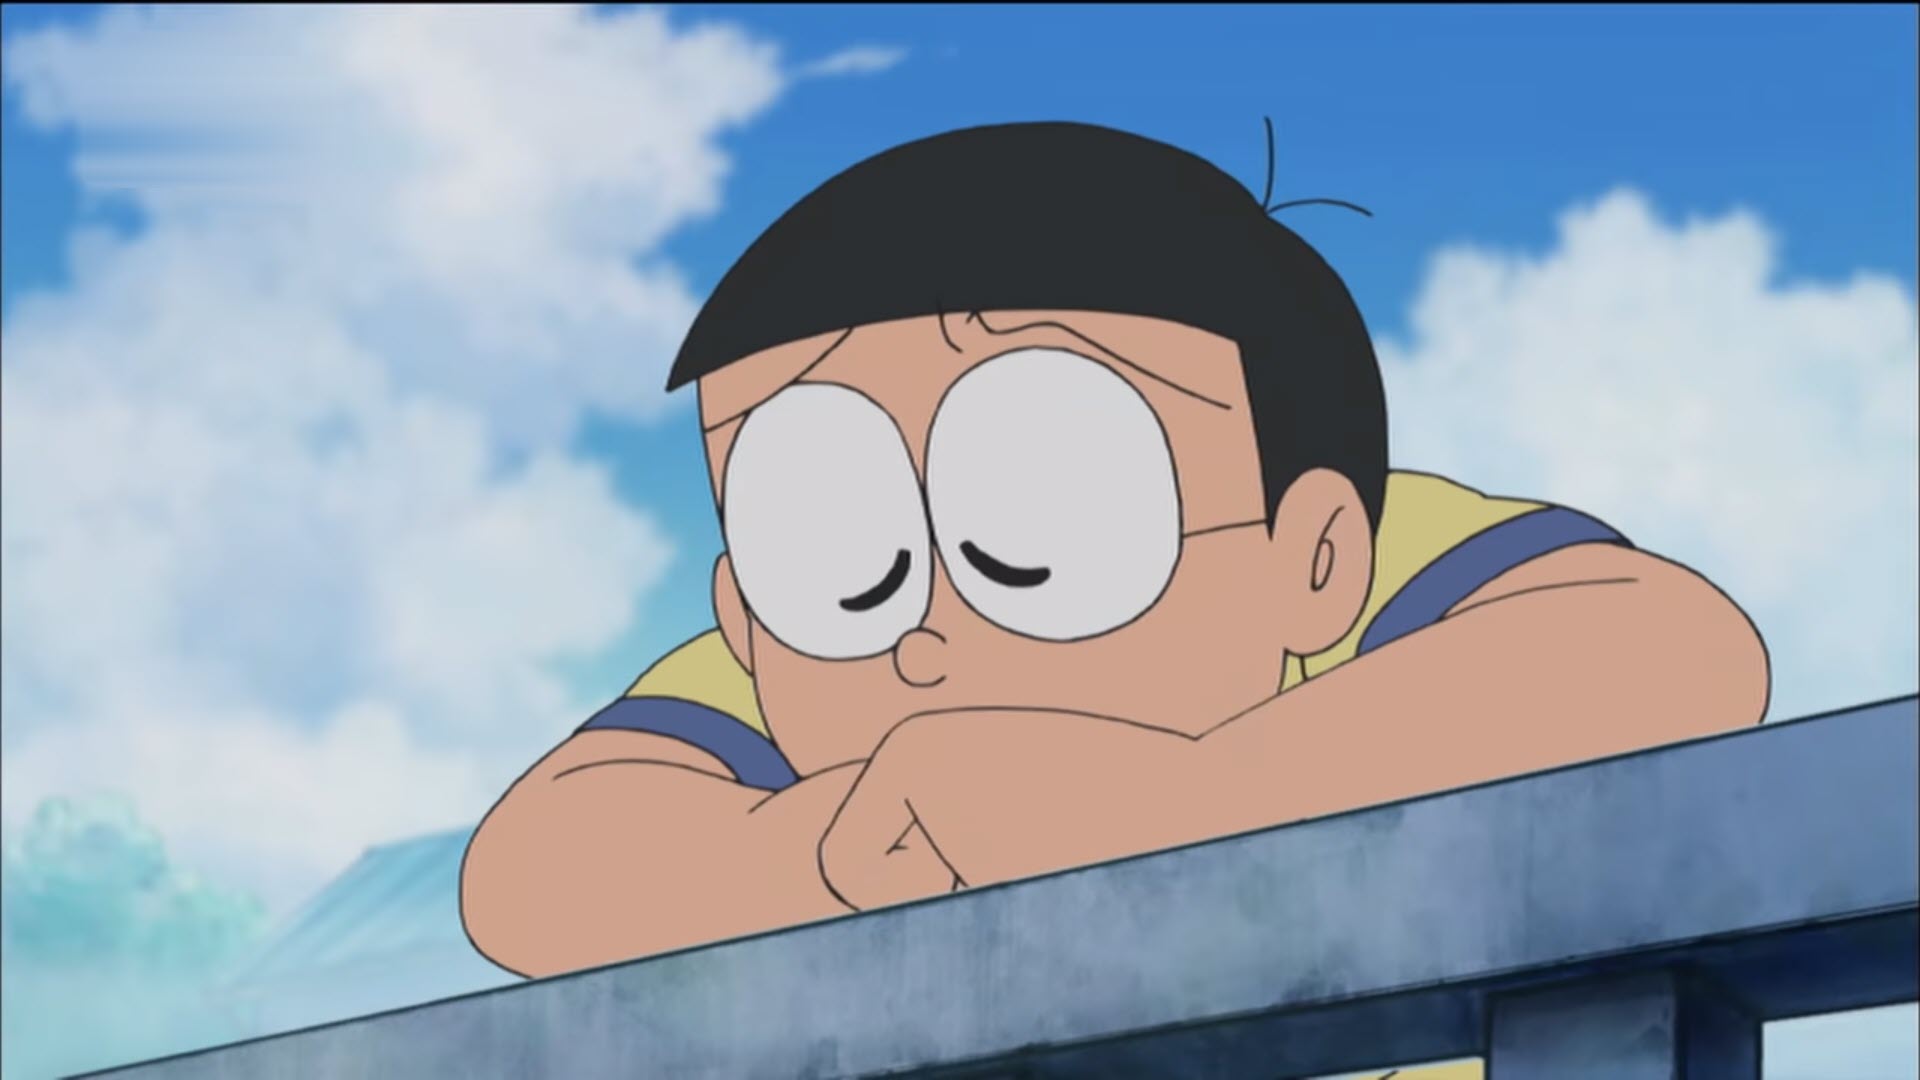 Hình nobita đẹp trai